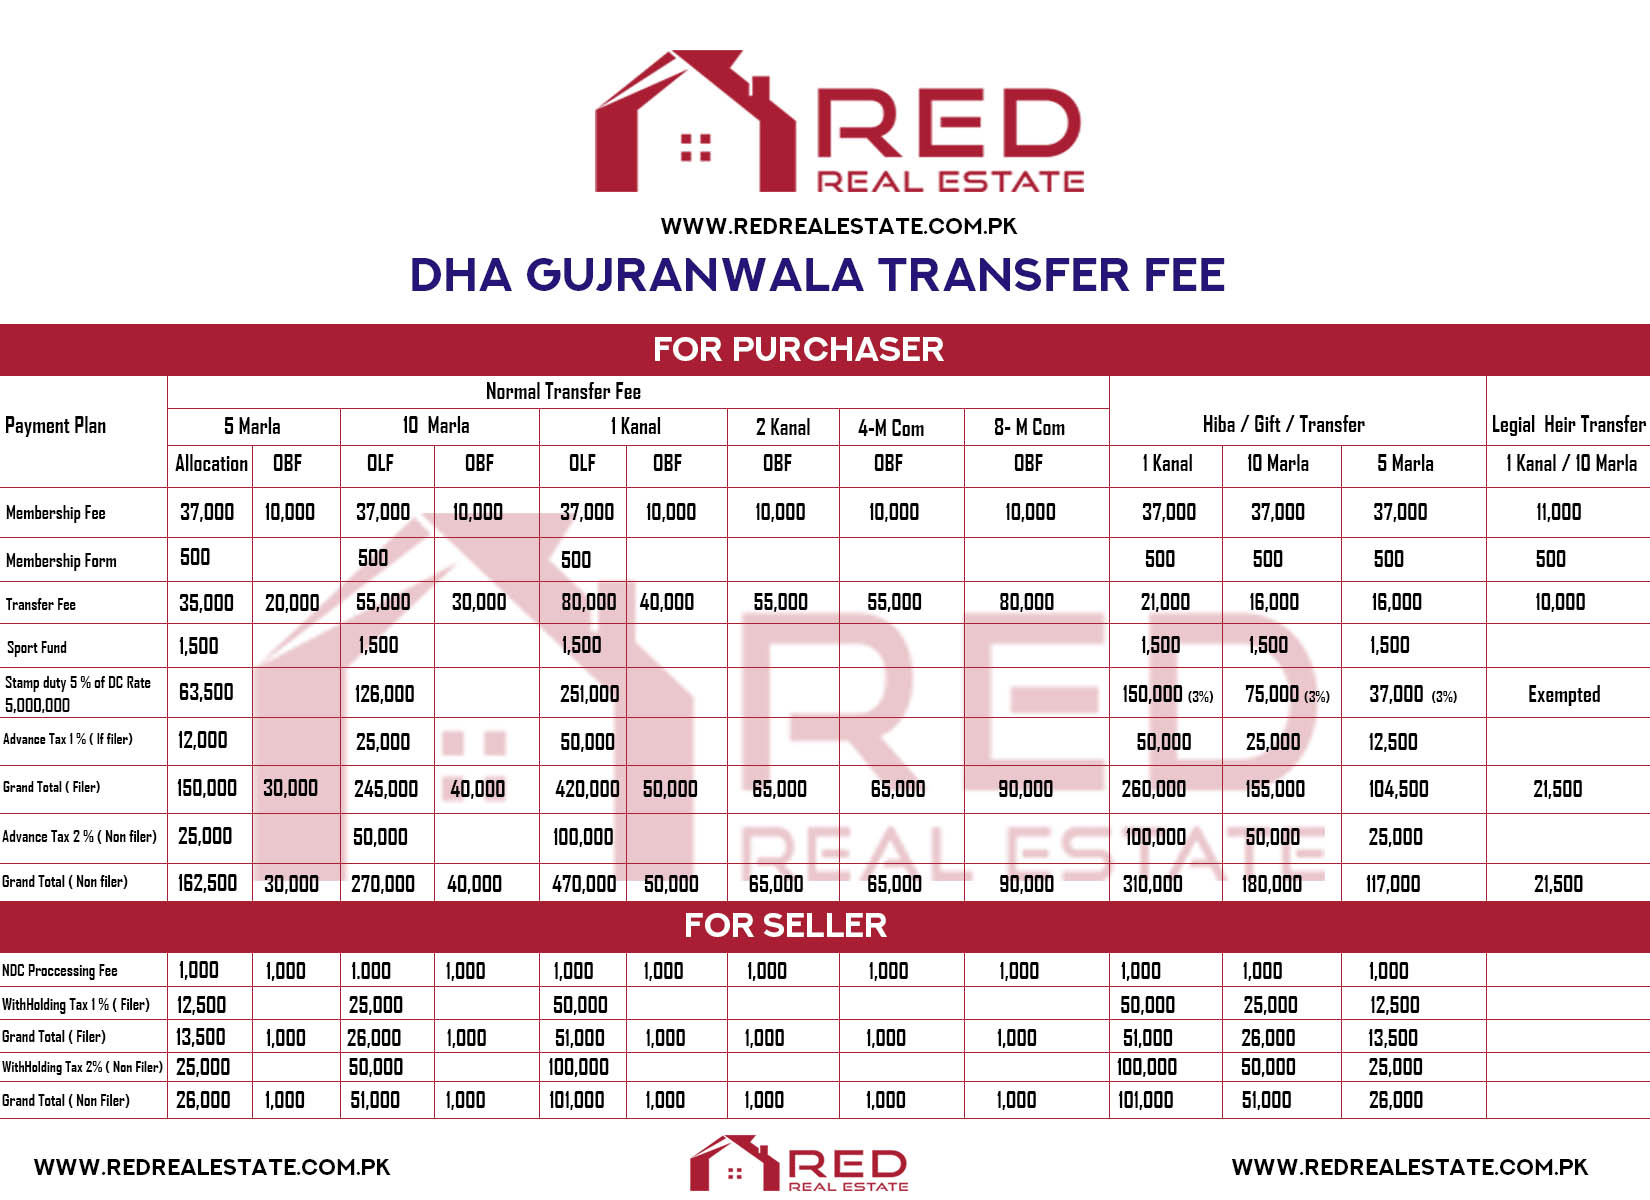 DHA Gujranwala Transfer Schedule 2020 